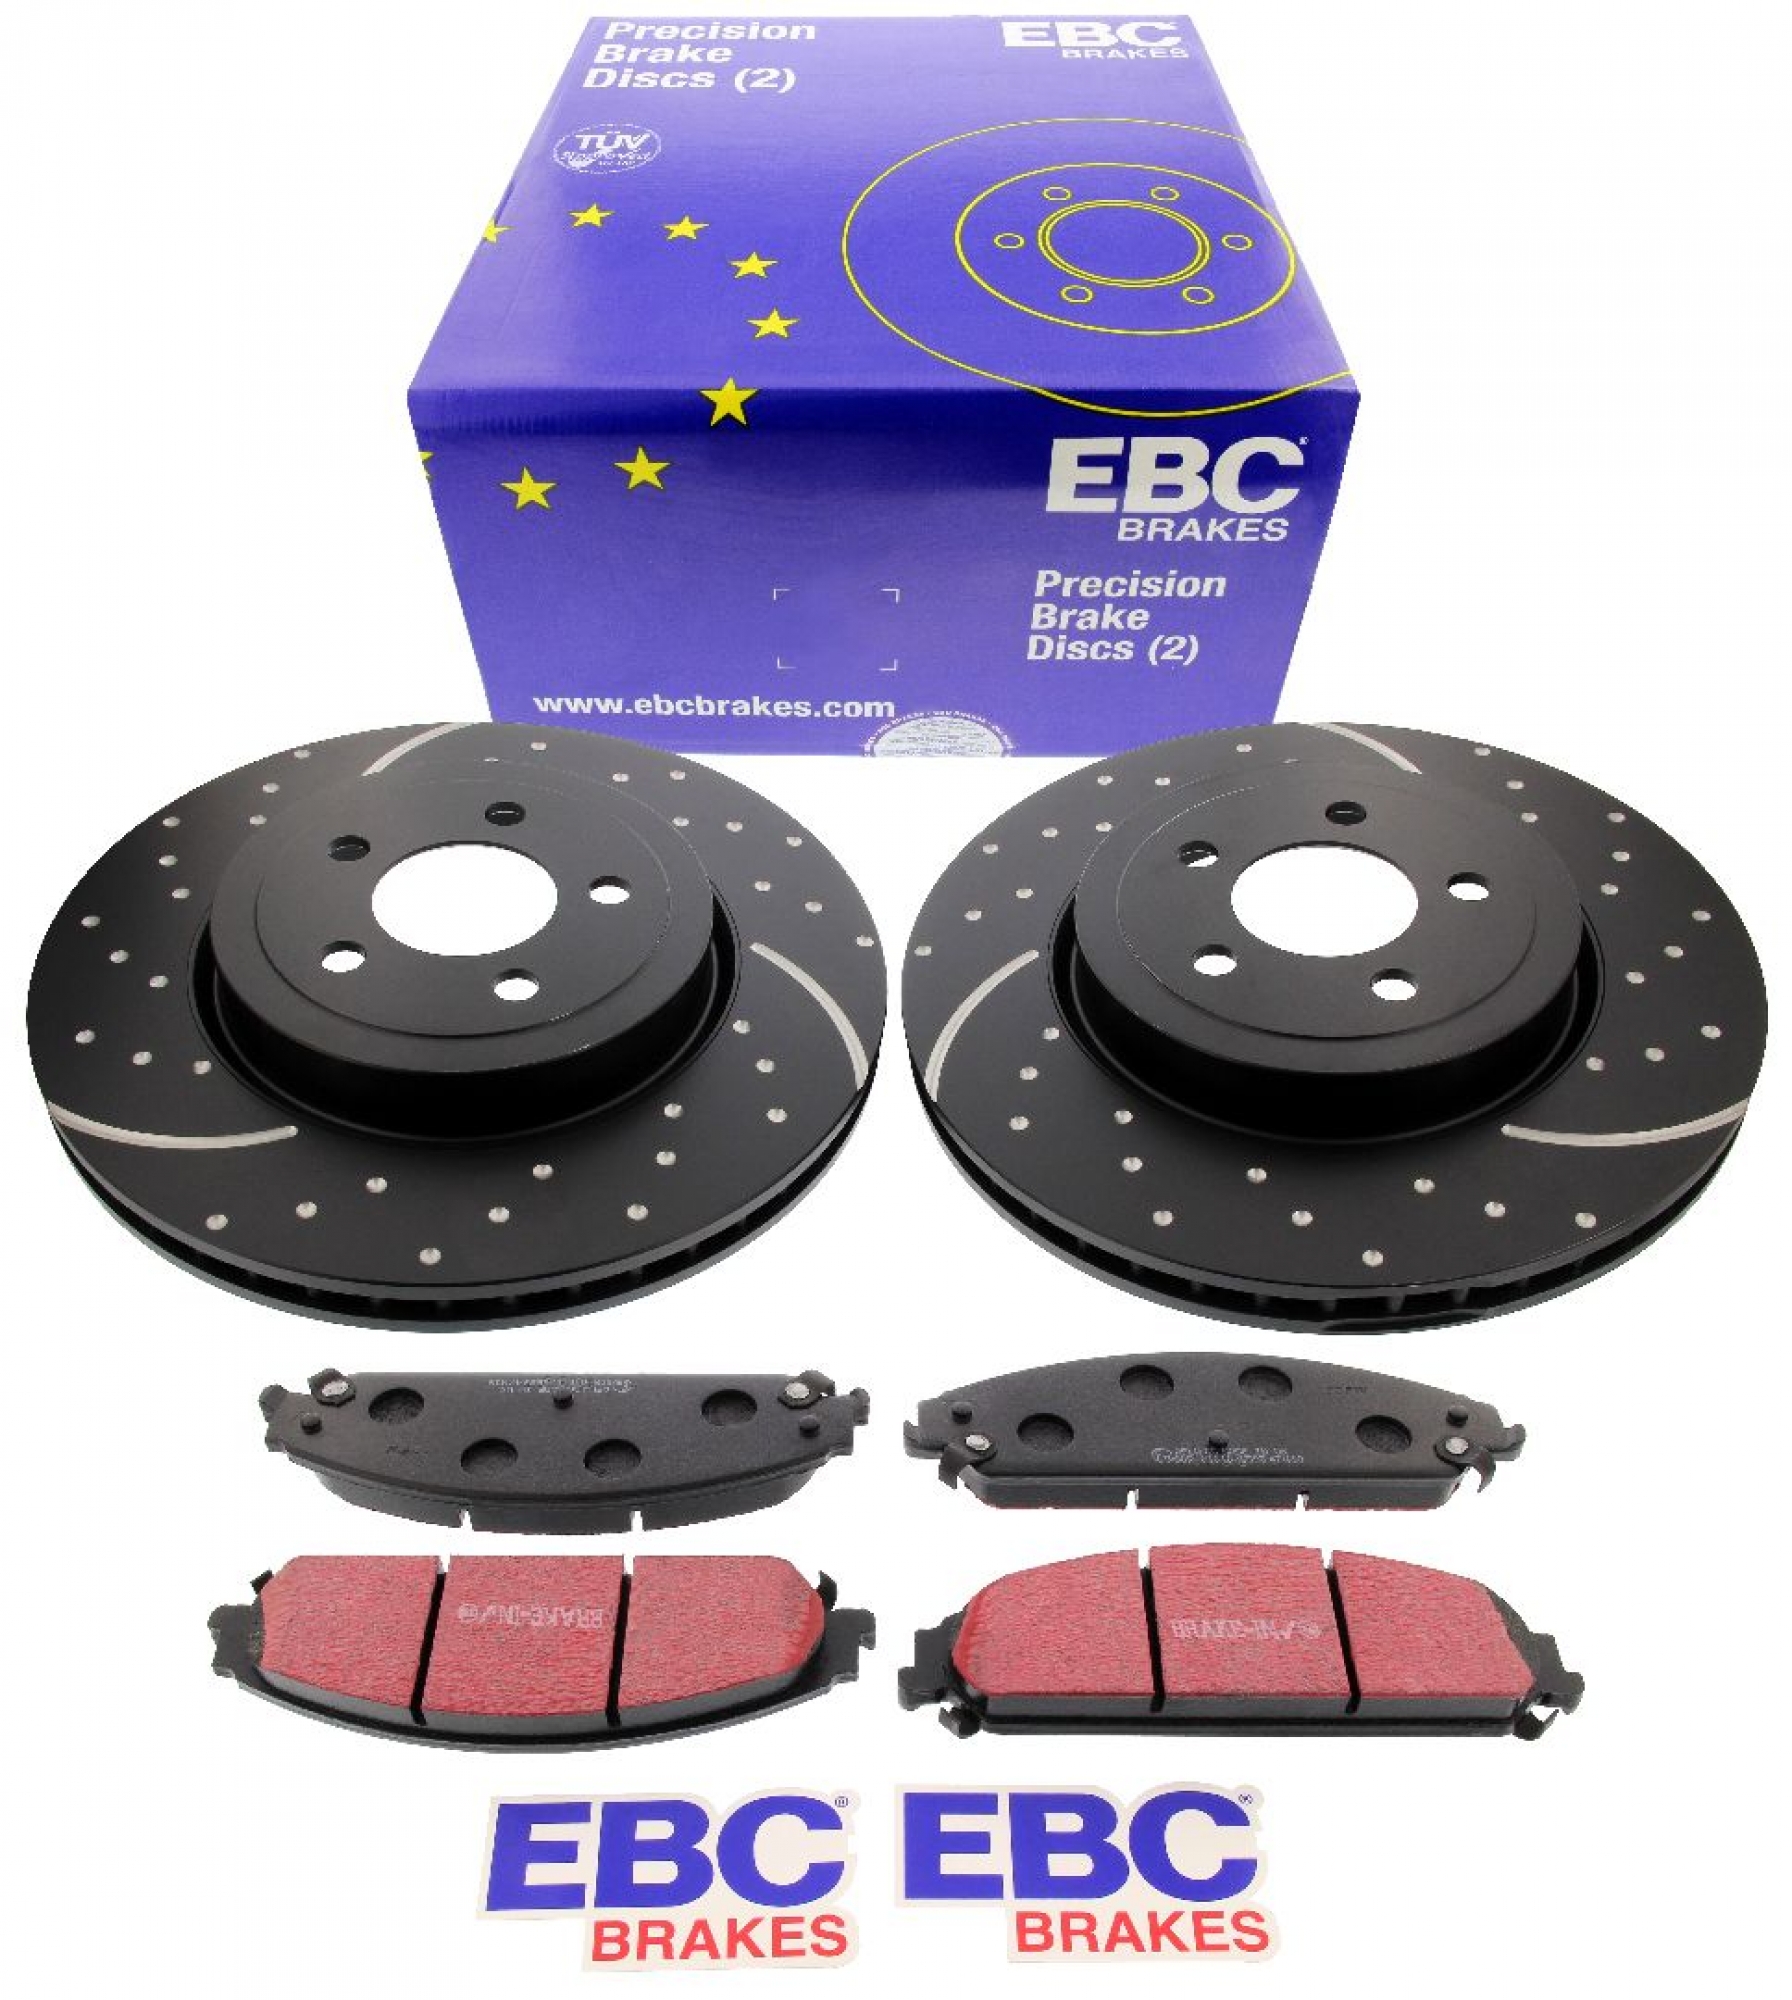 EBC-Bremsensatz, Turbo Groove Disc Black + Bremsbeläge, Blackstuff, Achssatz, VA, Chrysler 300C, Lancia Thema